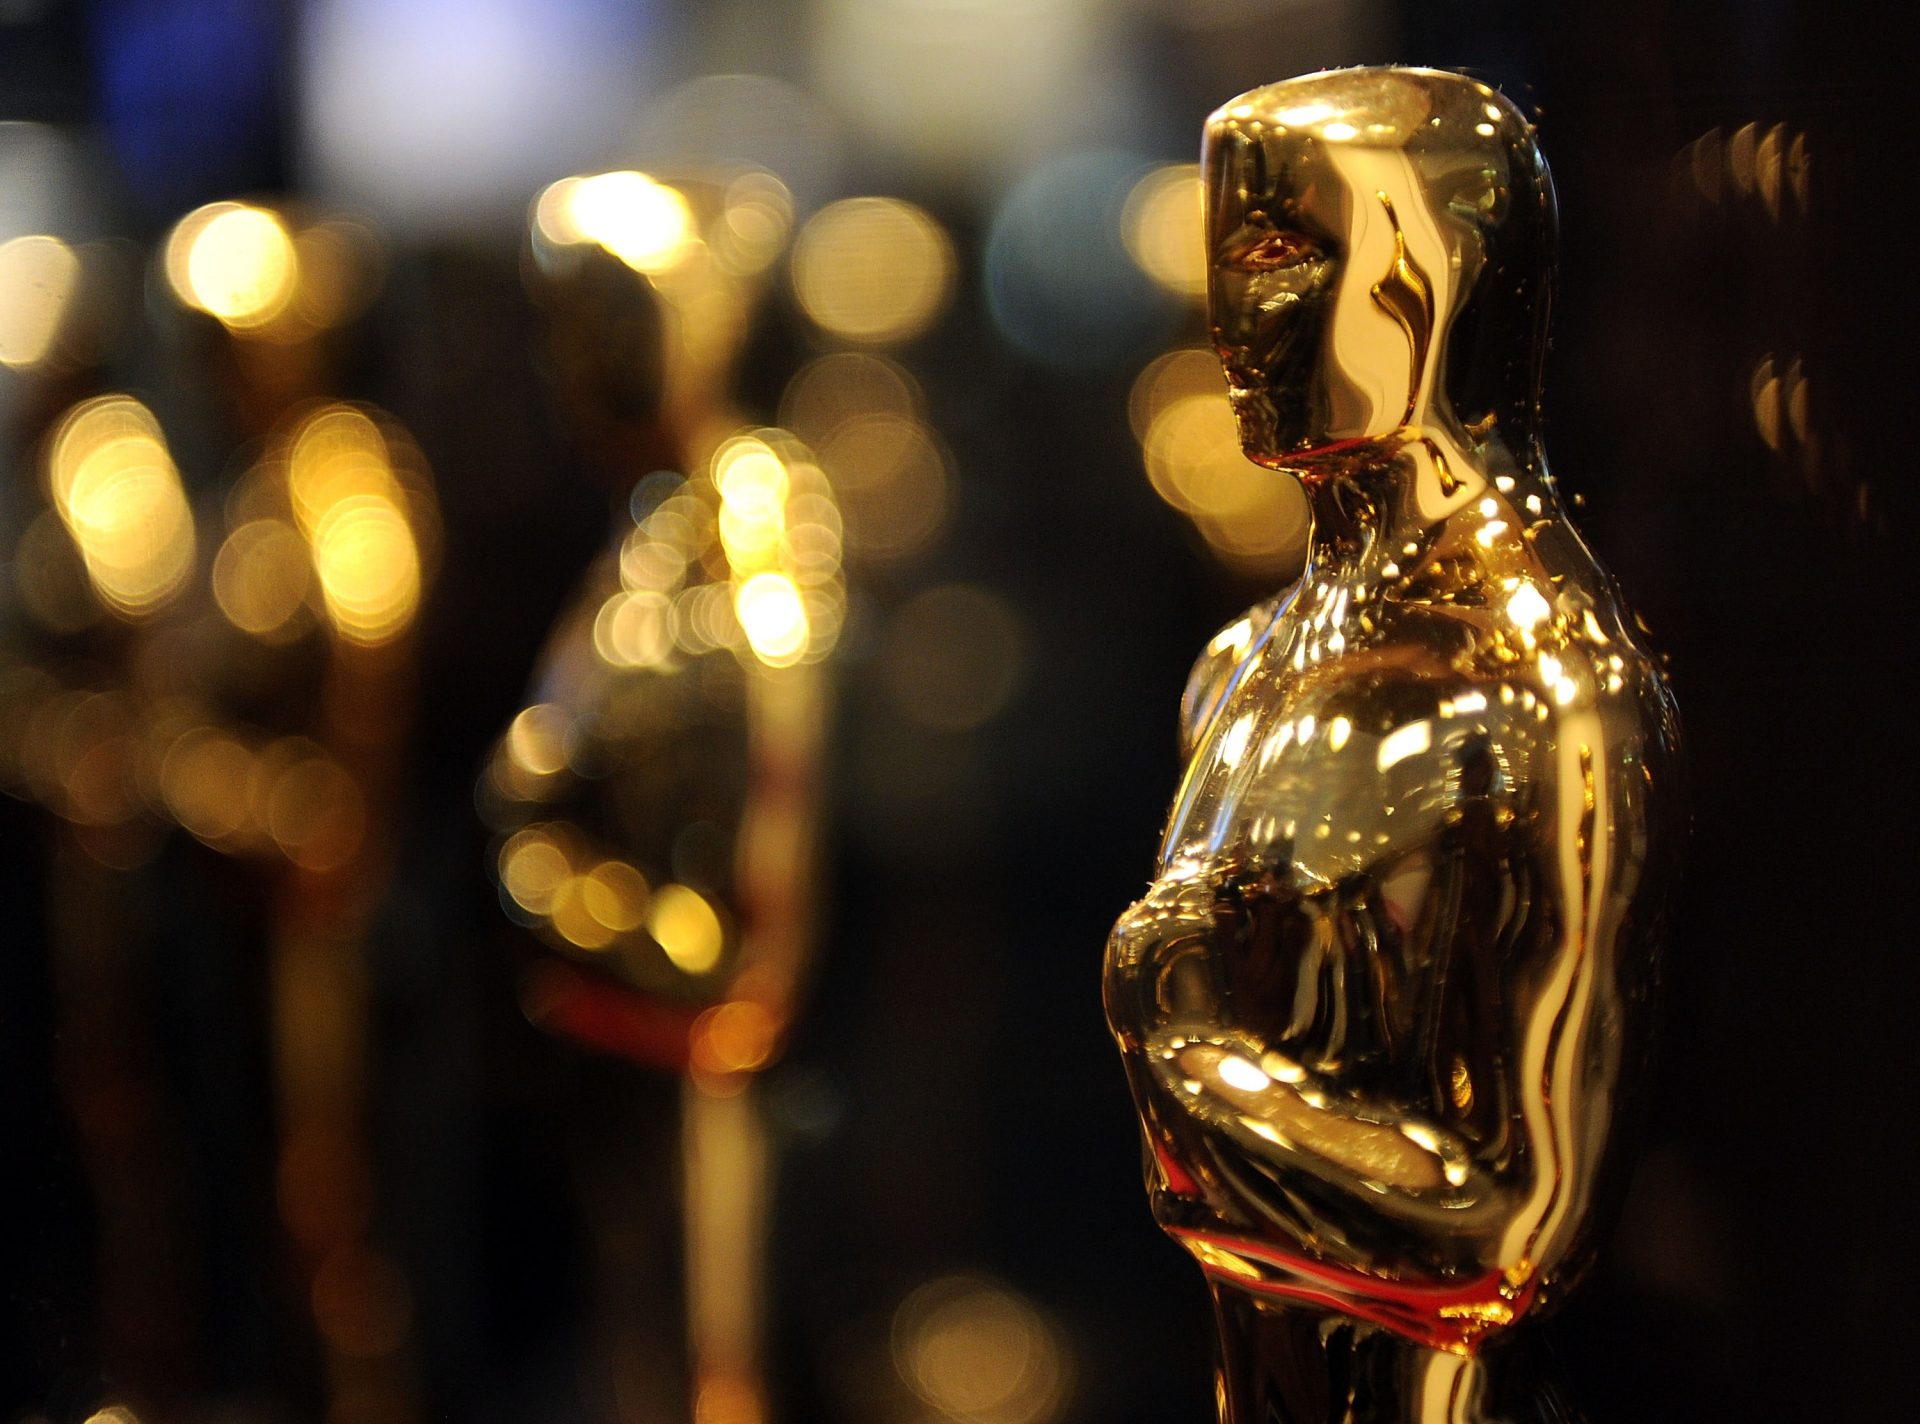 The Next Oscars Has Been Postponed Till April 2021 Due to the Coronavirus